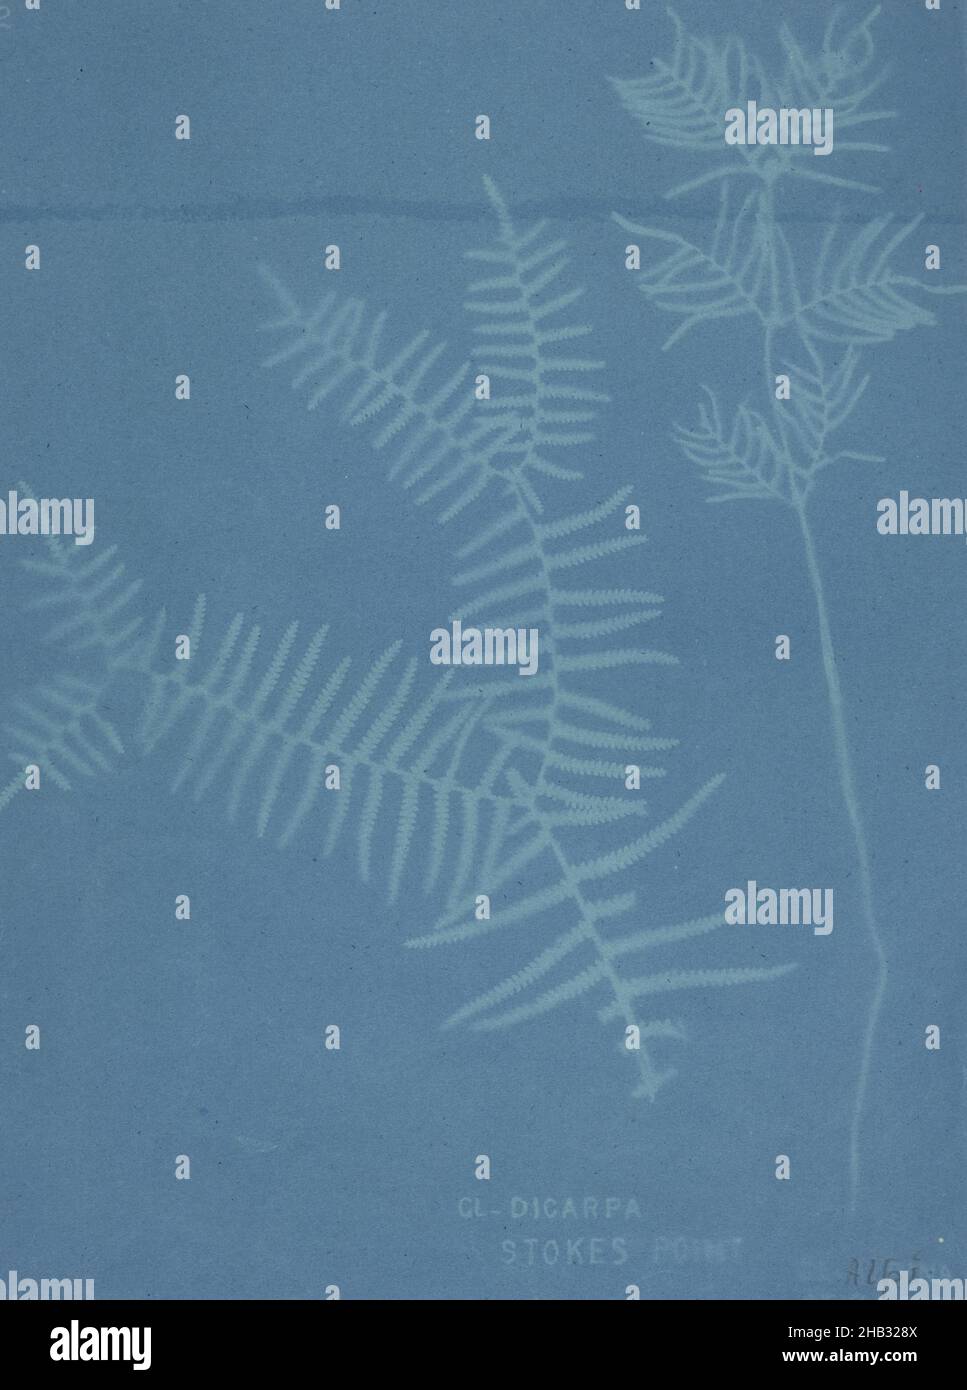 Gleichenia dicarpa, Stokes Point and Gleichenia alpina, Otira Gorge. From the album: New Zealand ferns. 167 varieties, Eric Craig, maker/artist, 1888, Auckland, blueprint process Stock Photo